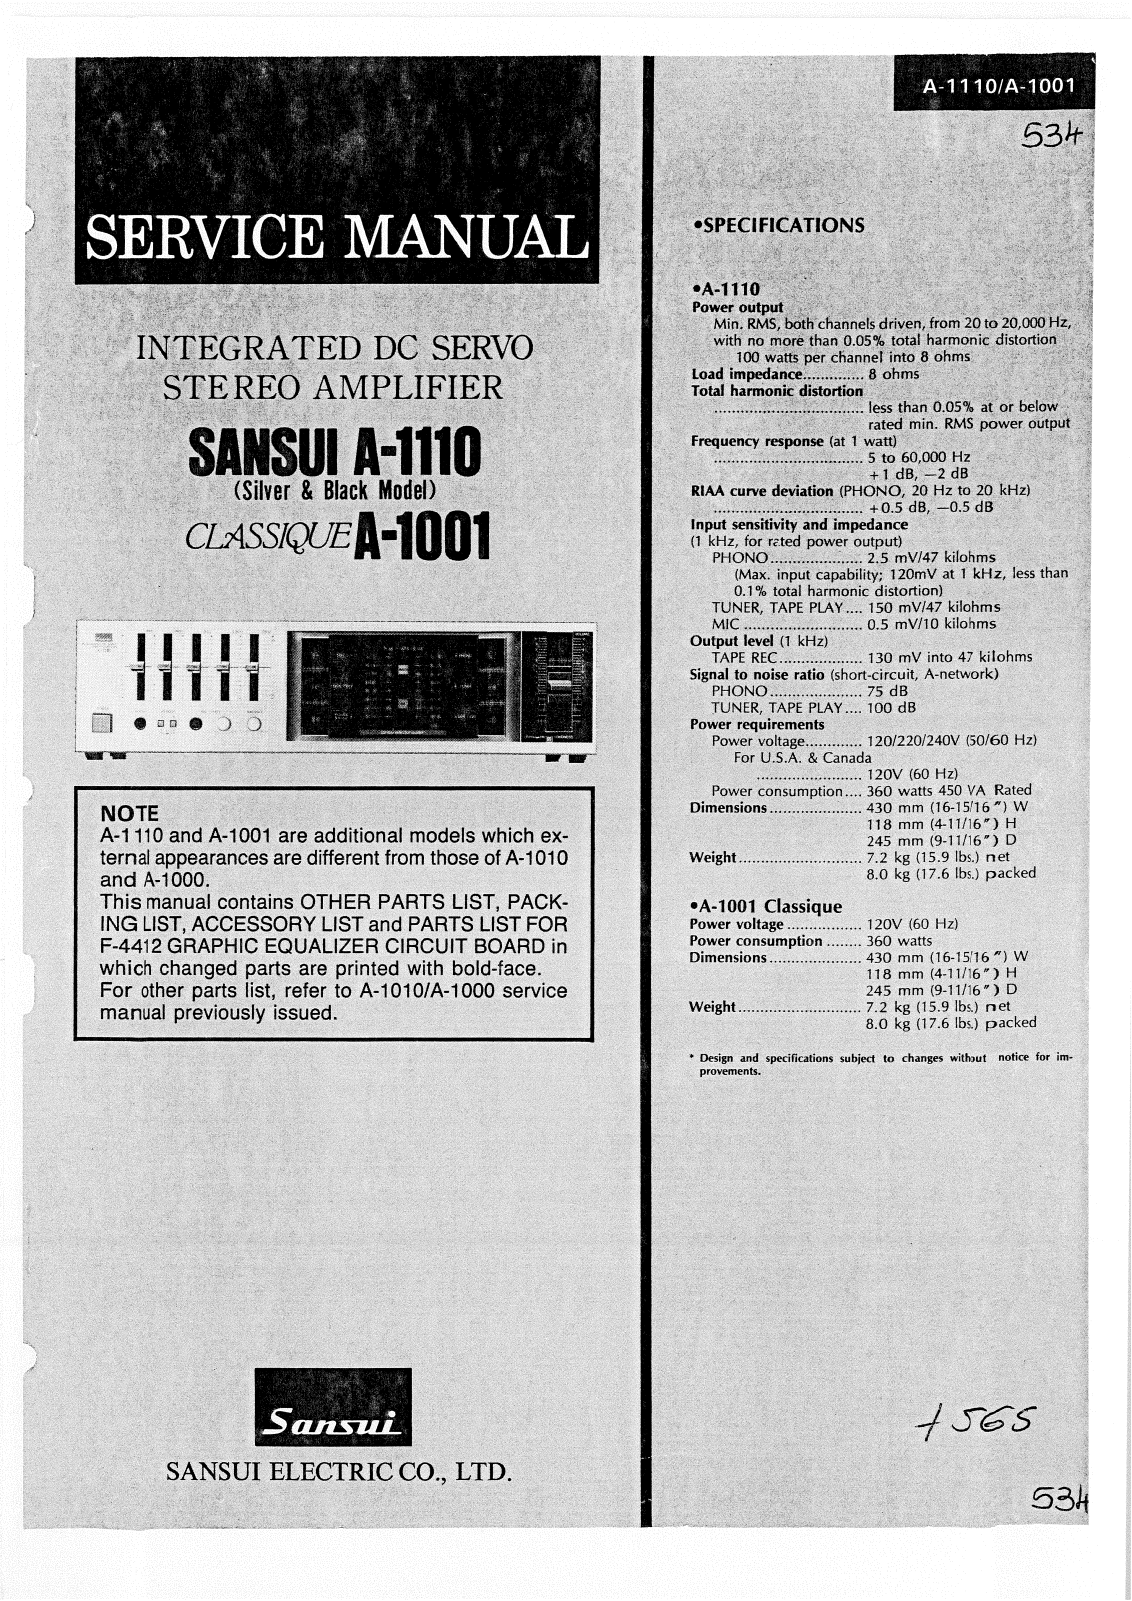 Sansui A-1001, A-1110 Service manual